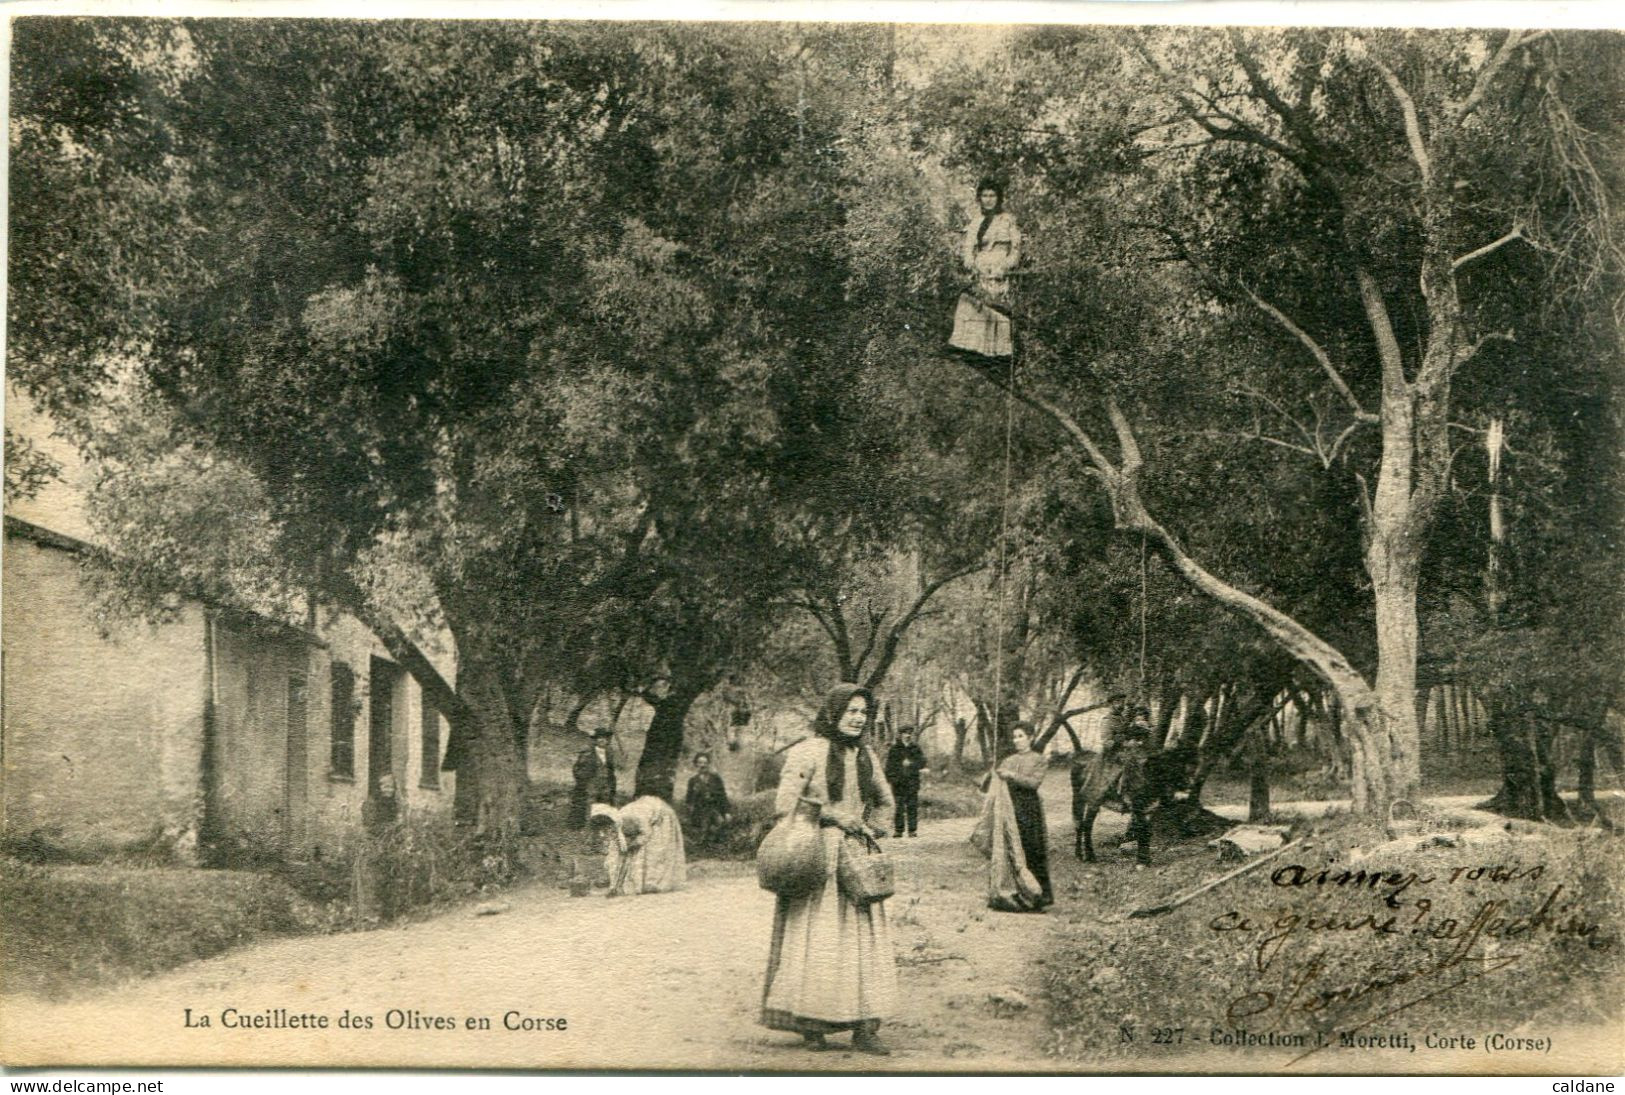 2A-CORSE  -  La Cueillette Des Olives En Corse        Collection J.Moretti,Corte - Culturas